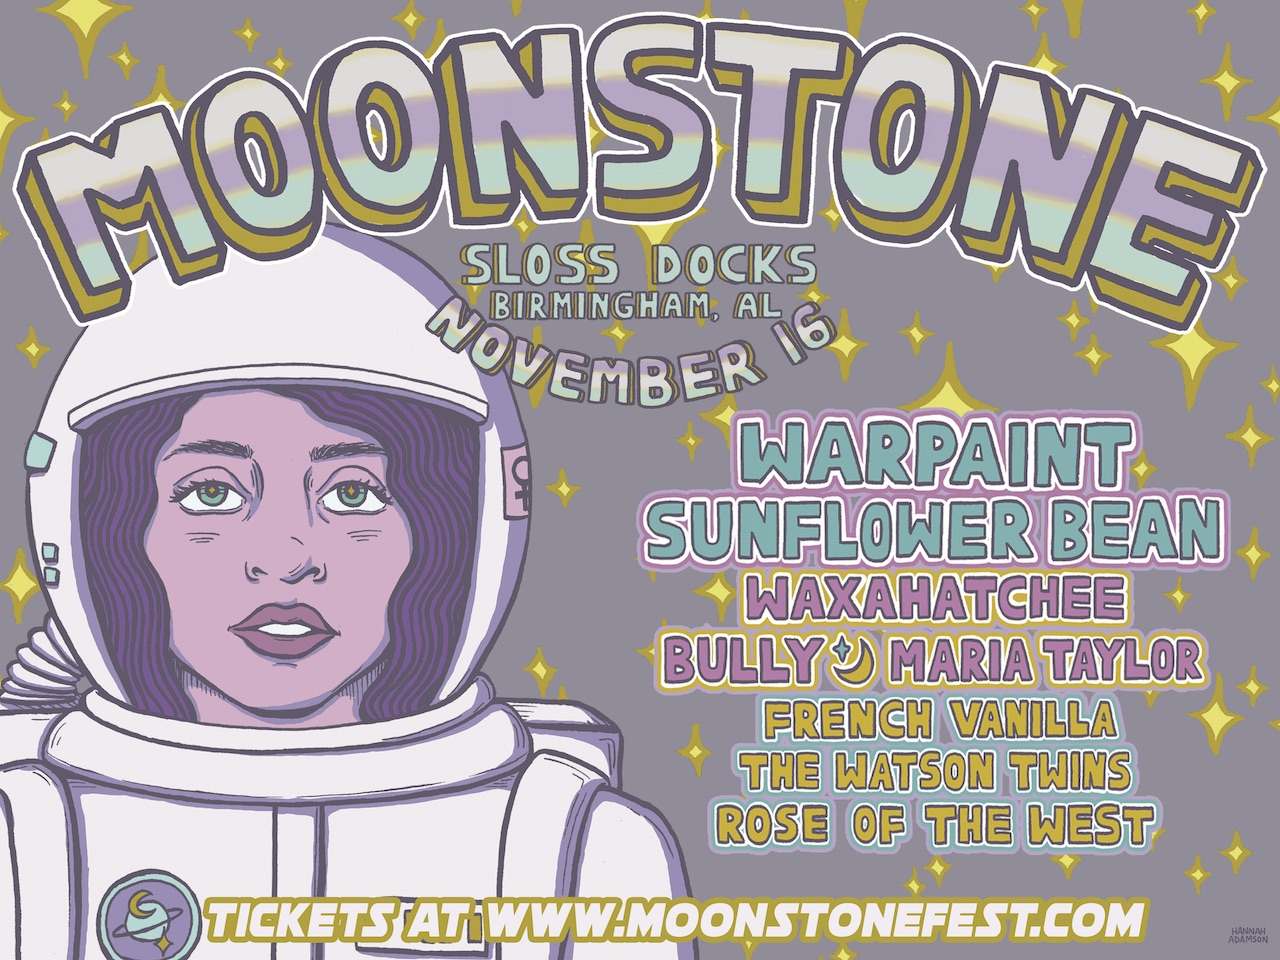 moonstone Moonstone Festival, a female focused music and arts fest, happening Nov. 16th at Sloss Docks. Win VIP tickets!